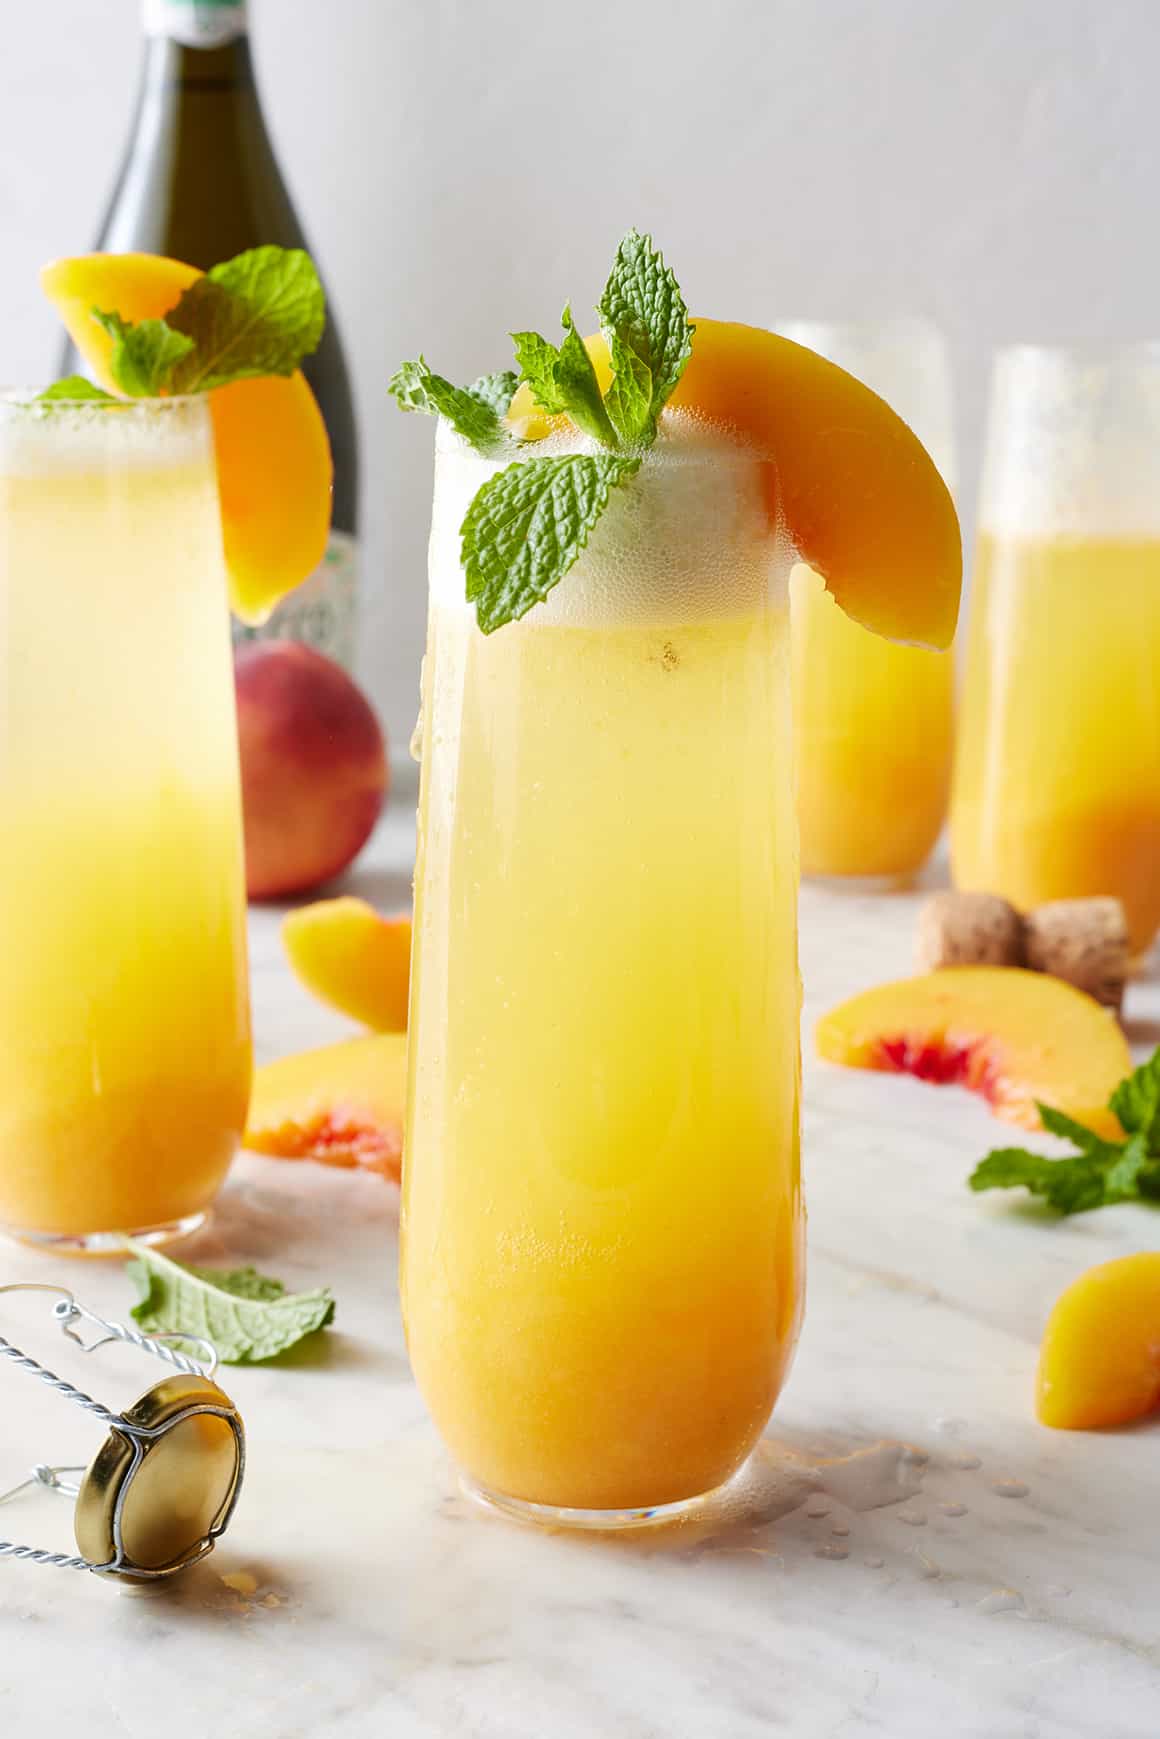 Peach bellini cocktail